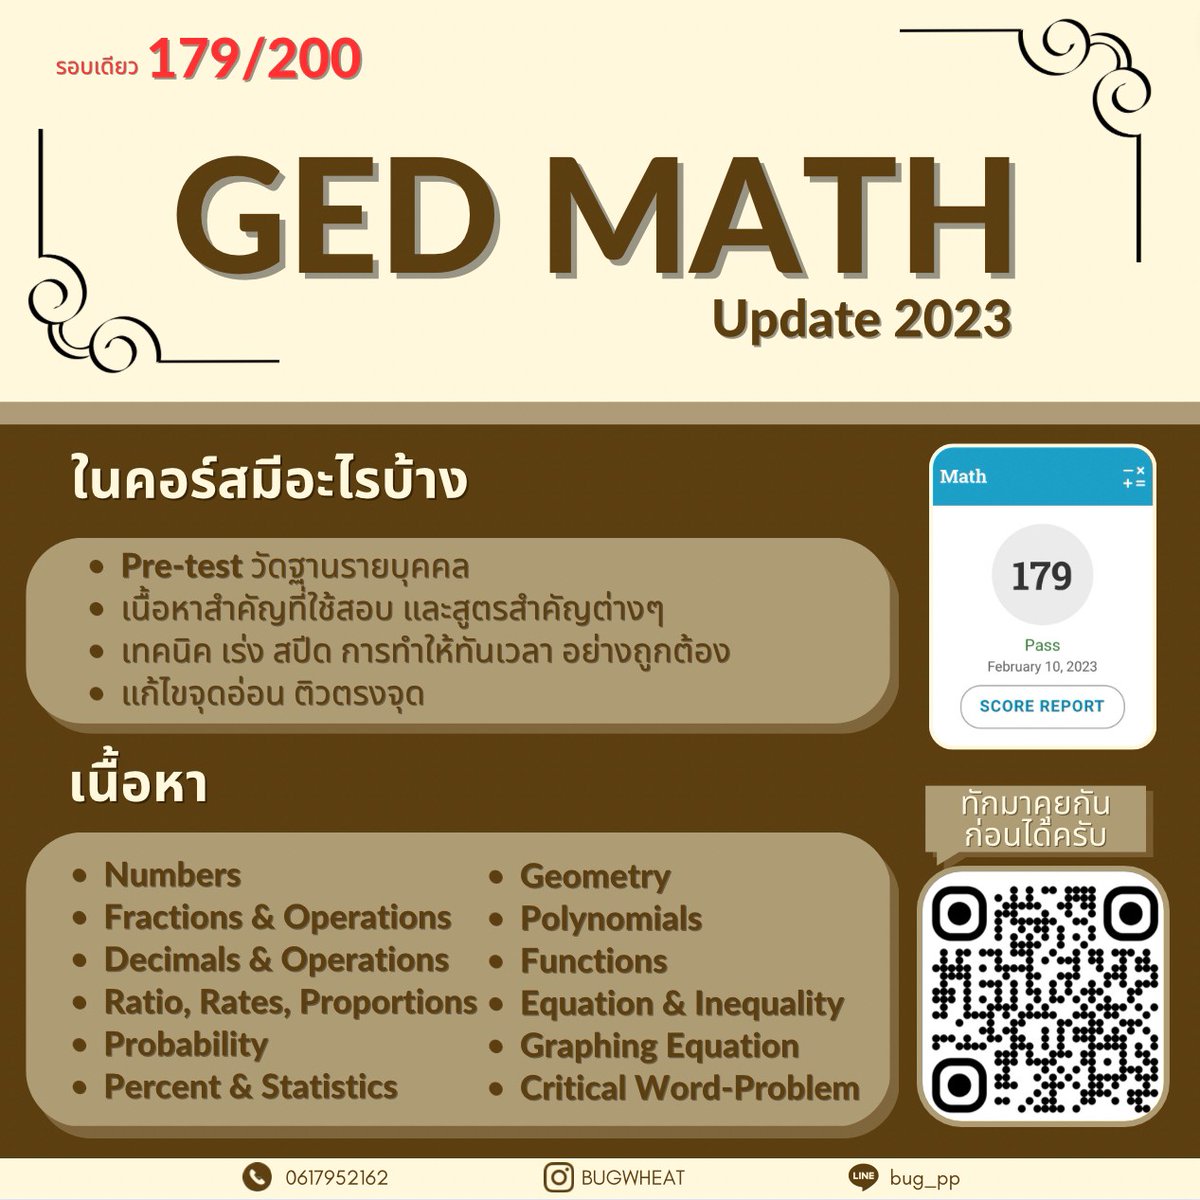 Math ออกสอบอะไรบ้างน้า??
• สอน GED ทุกวิชา 674/800🤩
#สอบged #mathged #ged #ged